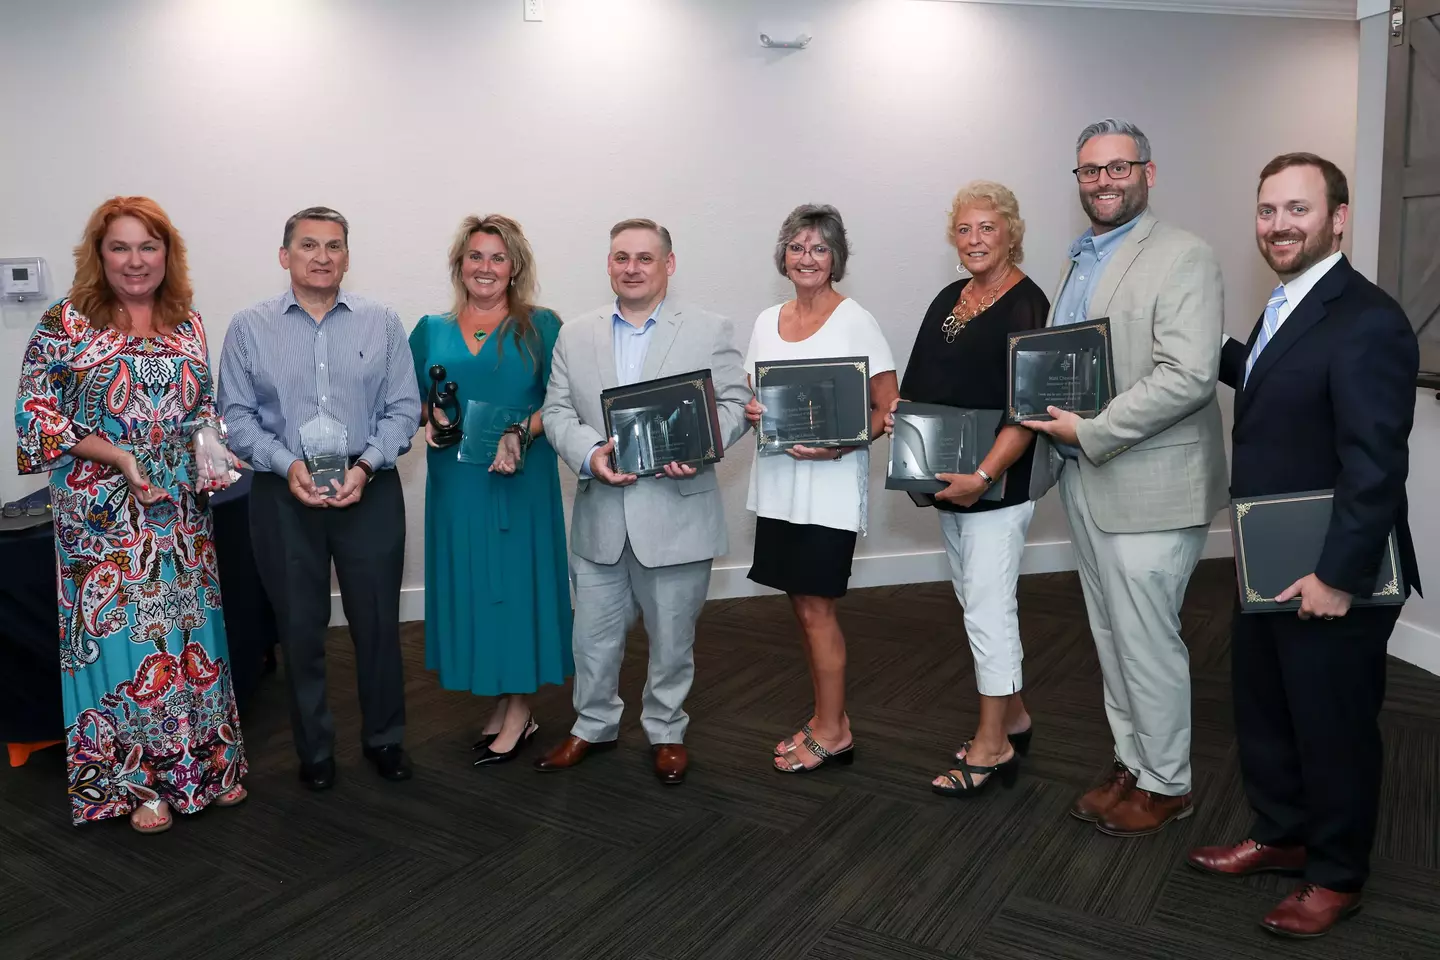 Recipients of the prestigious HCA Healthcare Awards of Distinction